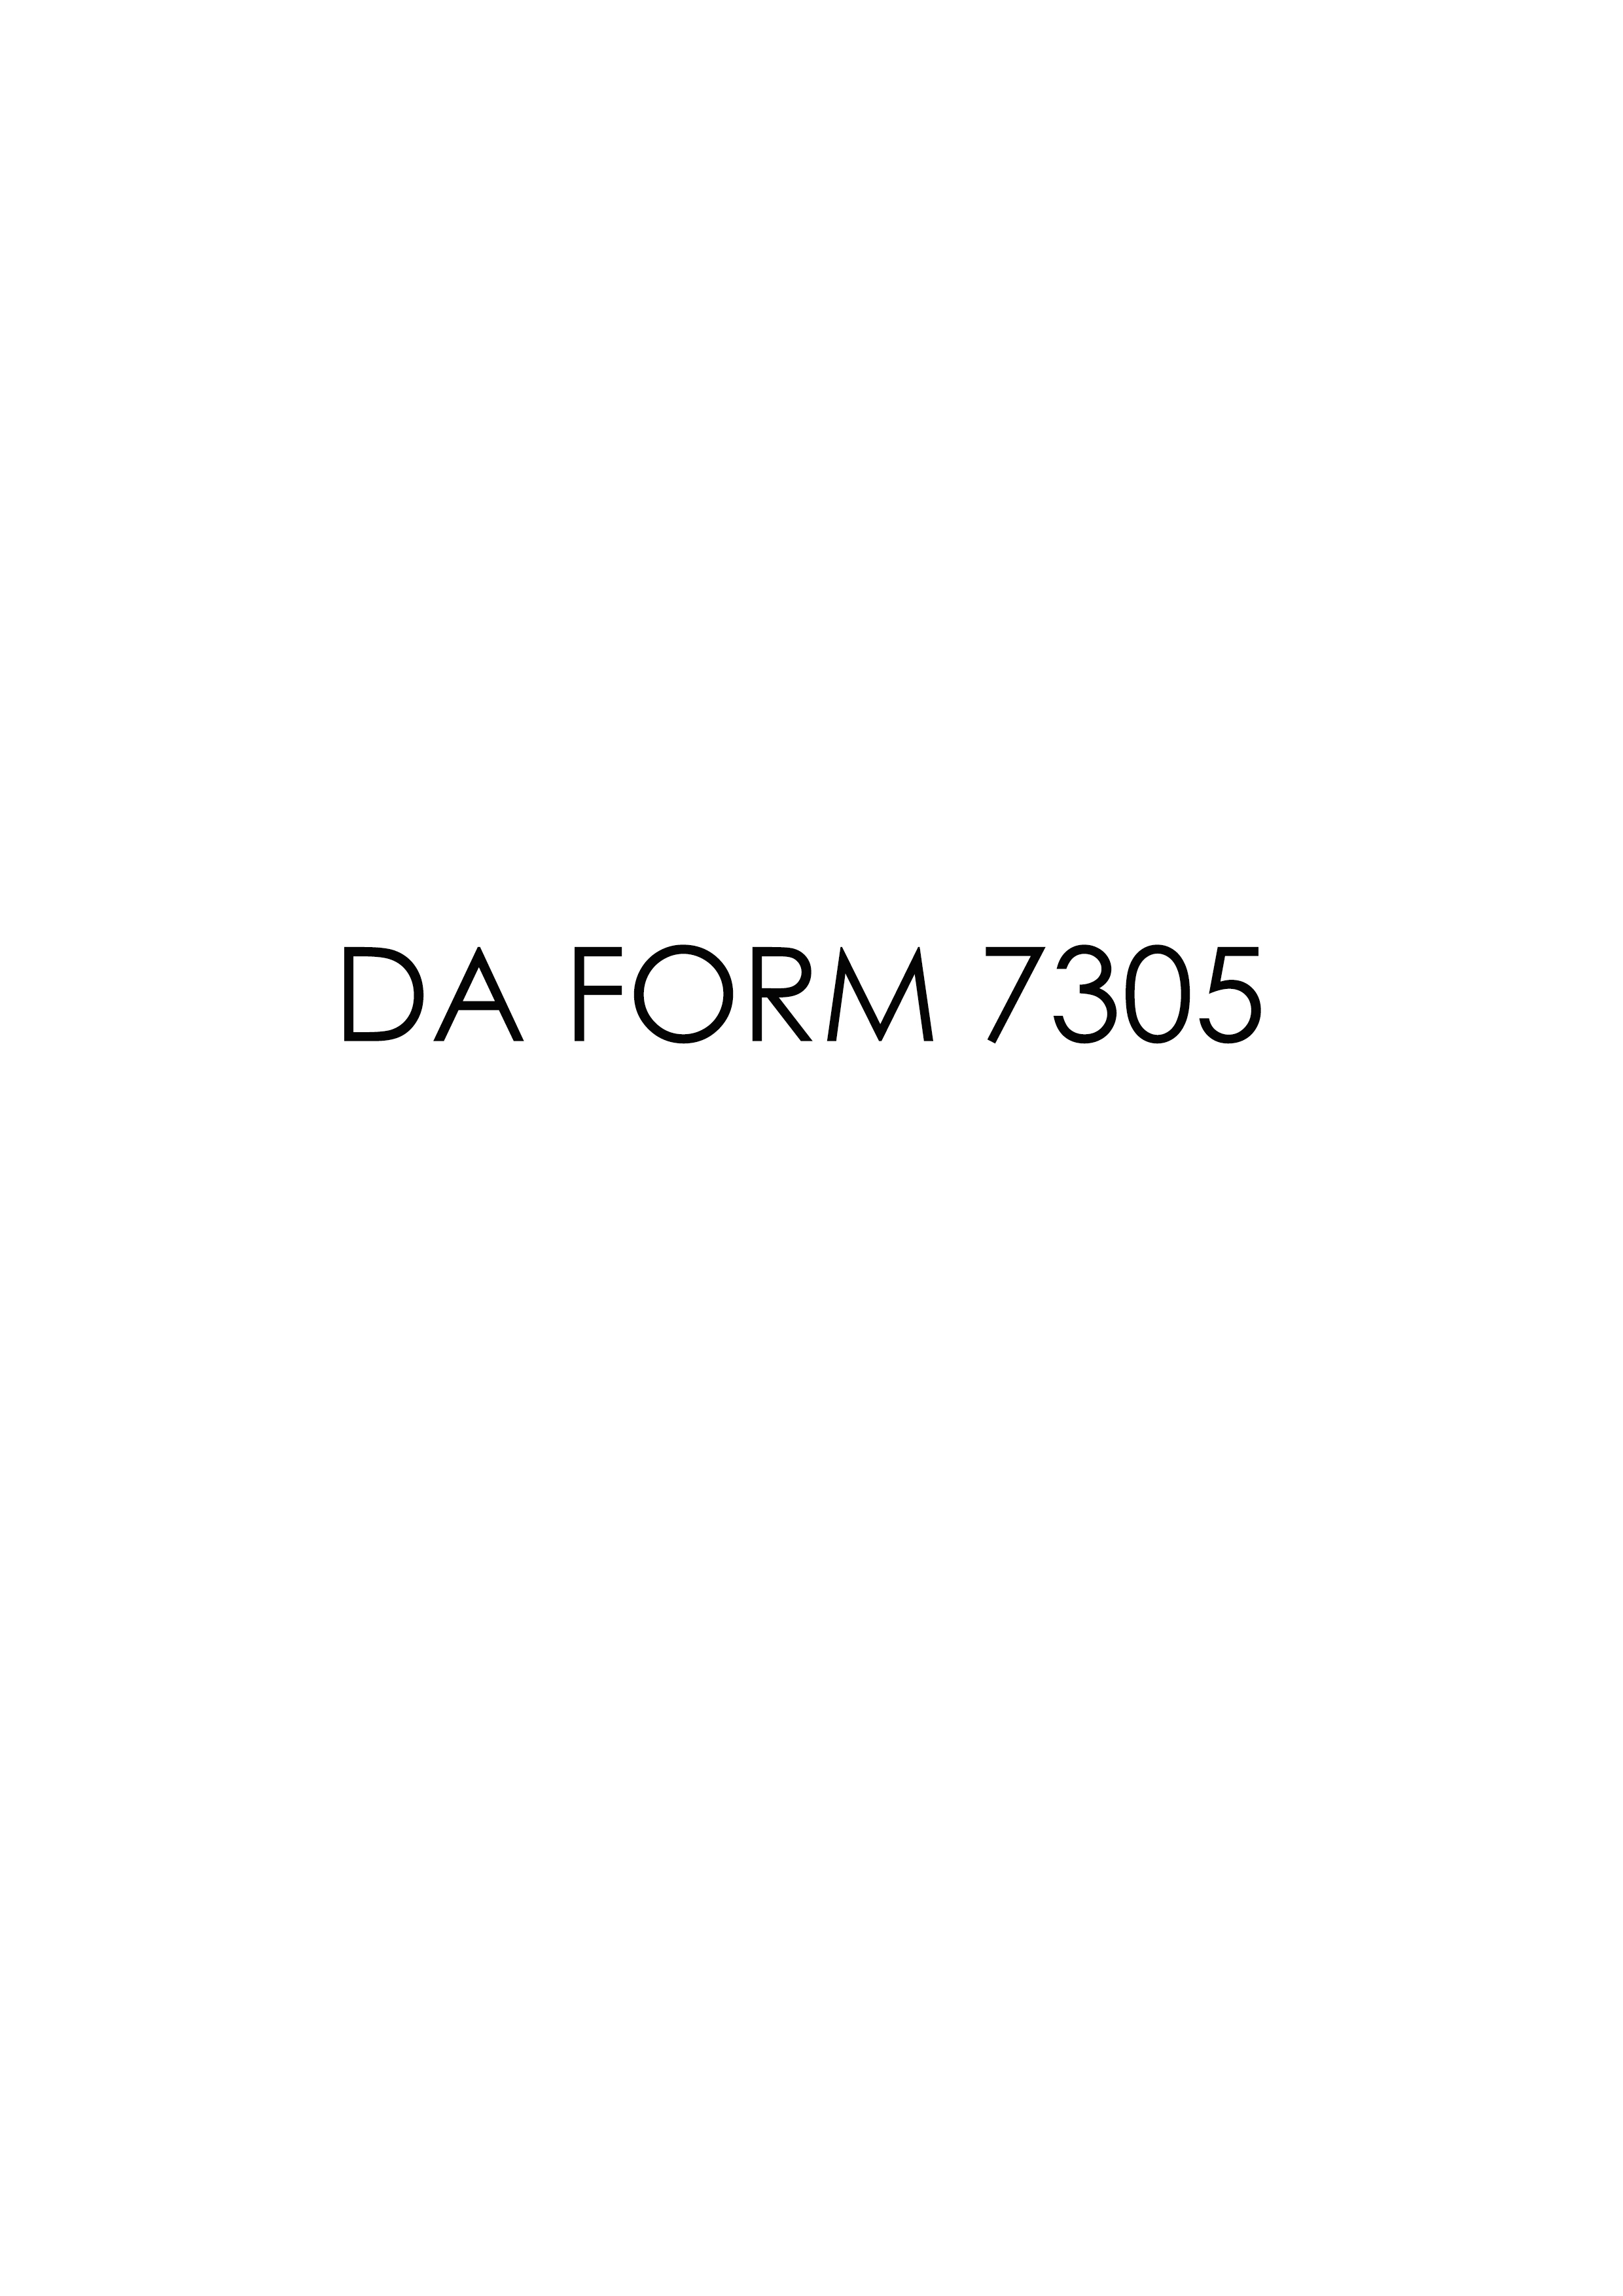 da Form 7305 fillable